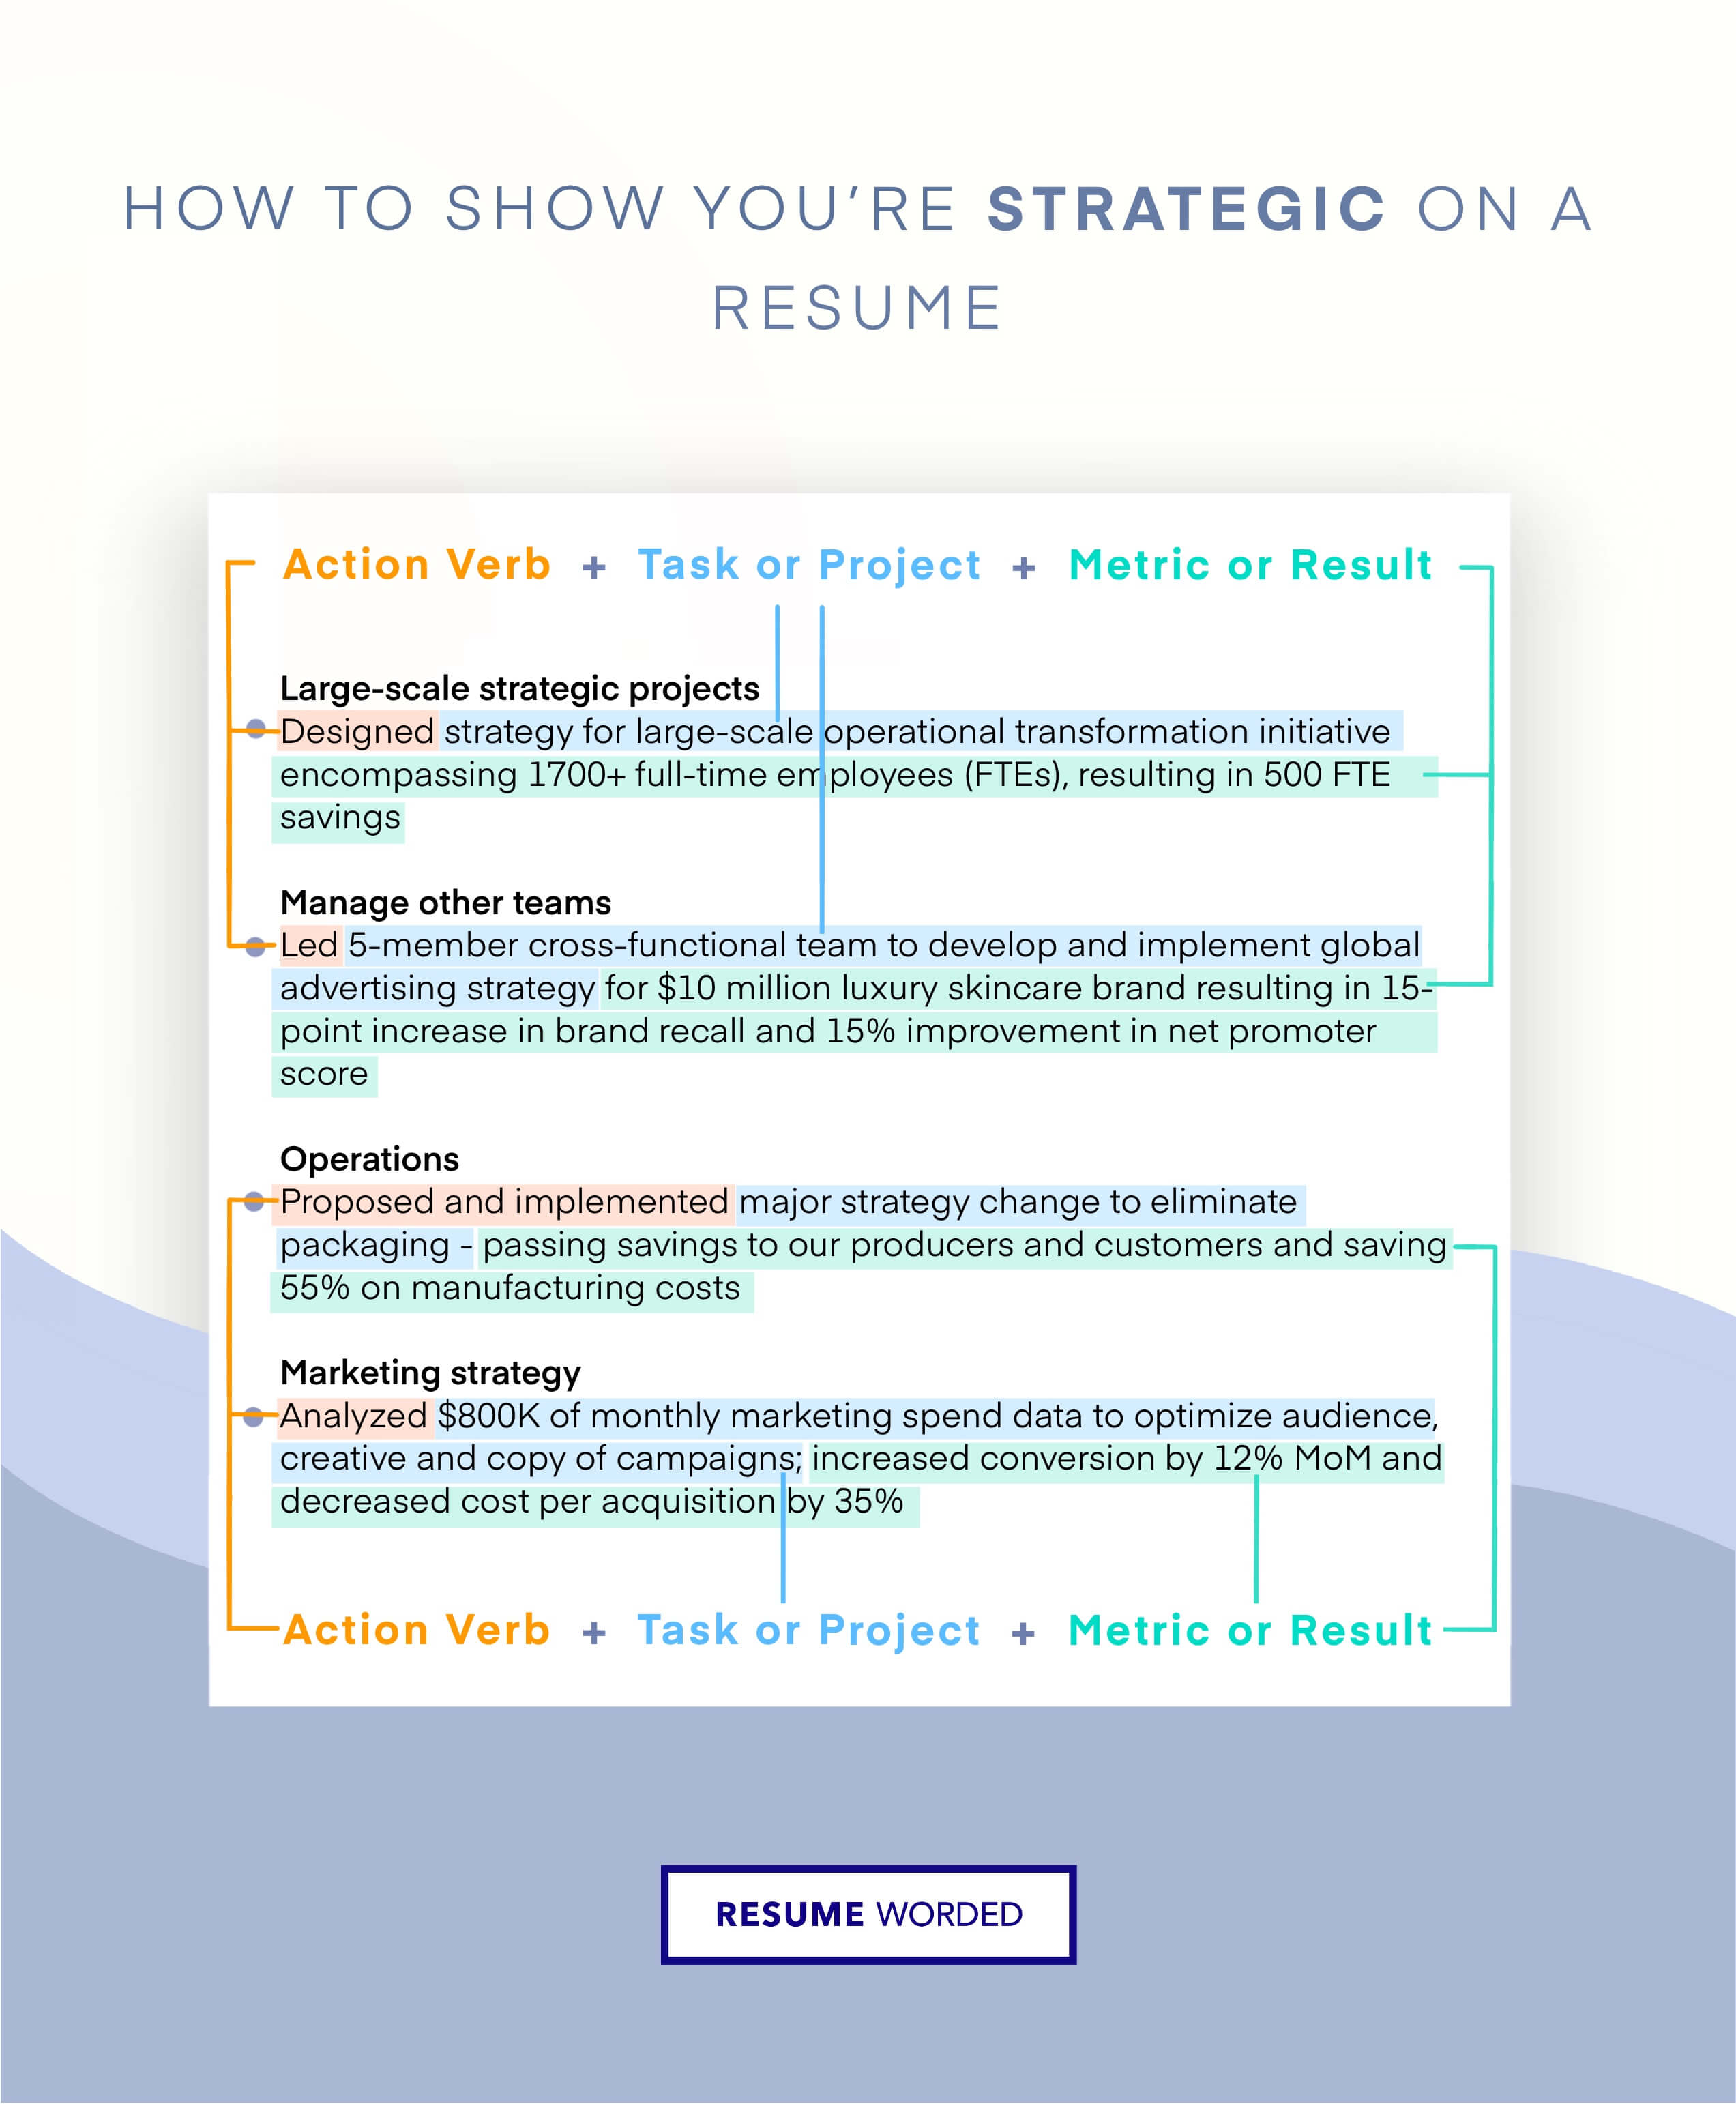 Showcase your strategic planning skills - Training and Development Manager CV